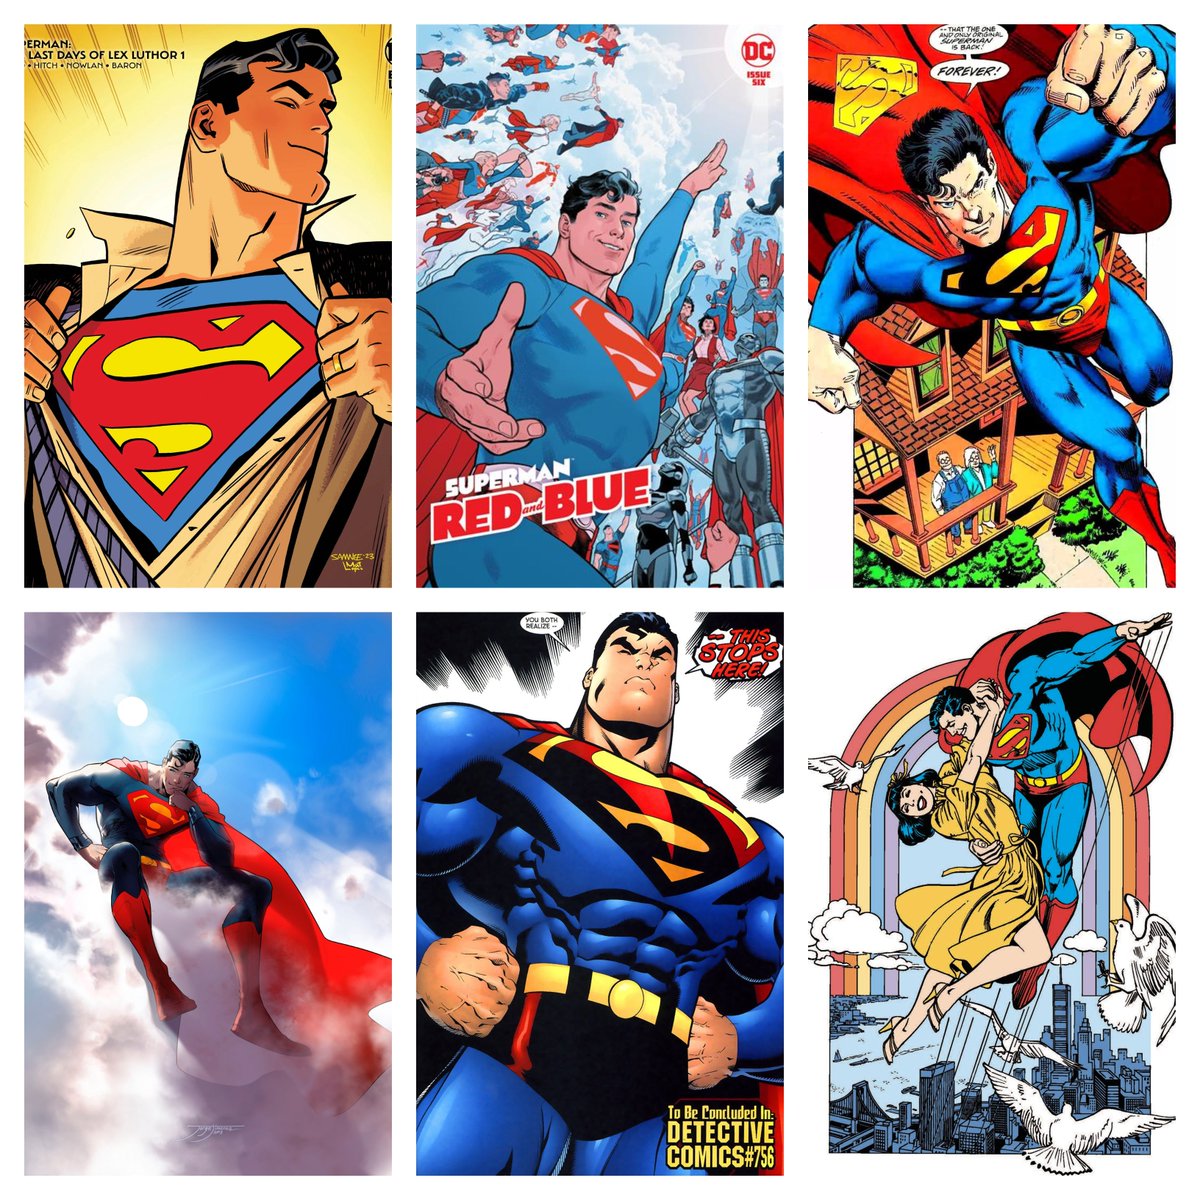 Personally my top 6 Superman artists:
1. Chris Samnee
2. Doc Shaner
3. Dan Jurgens
4. Jorge Jimenez
5. Ed McGuinness
6. Jorge Luis Garcia Lopez